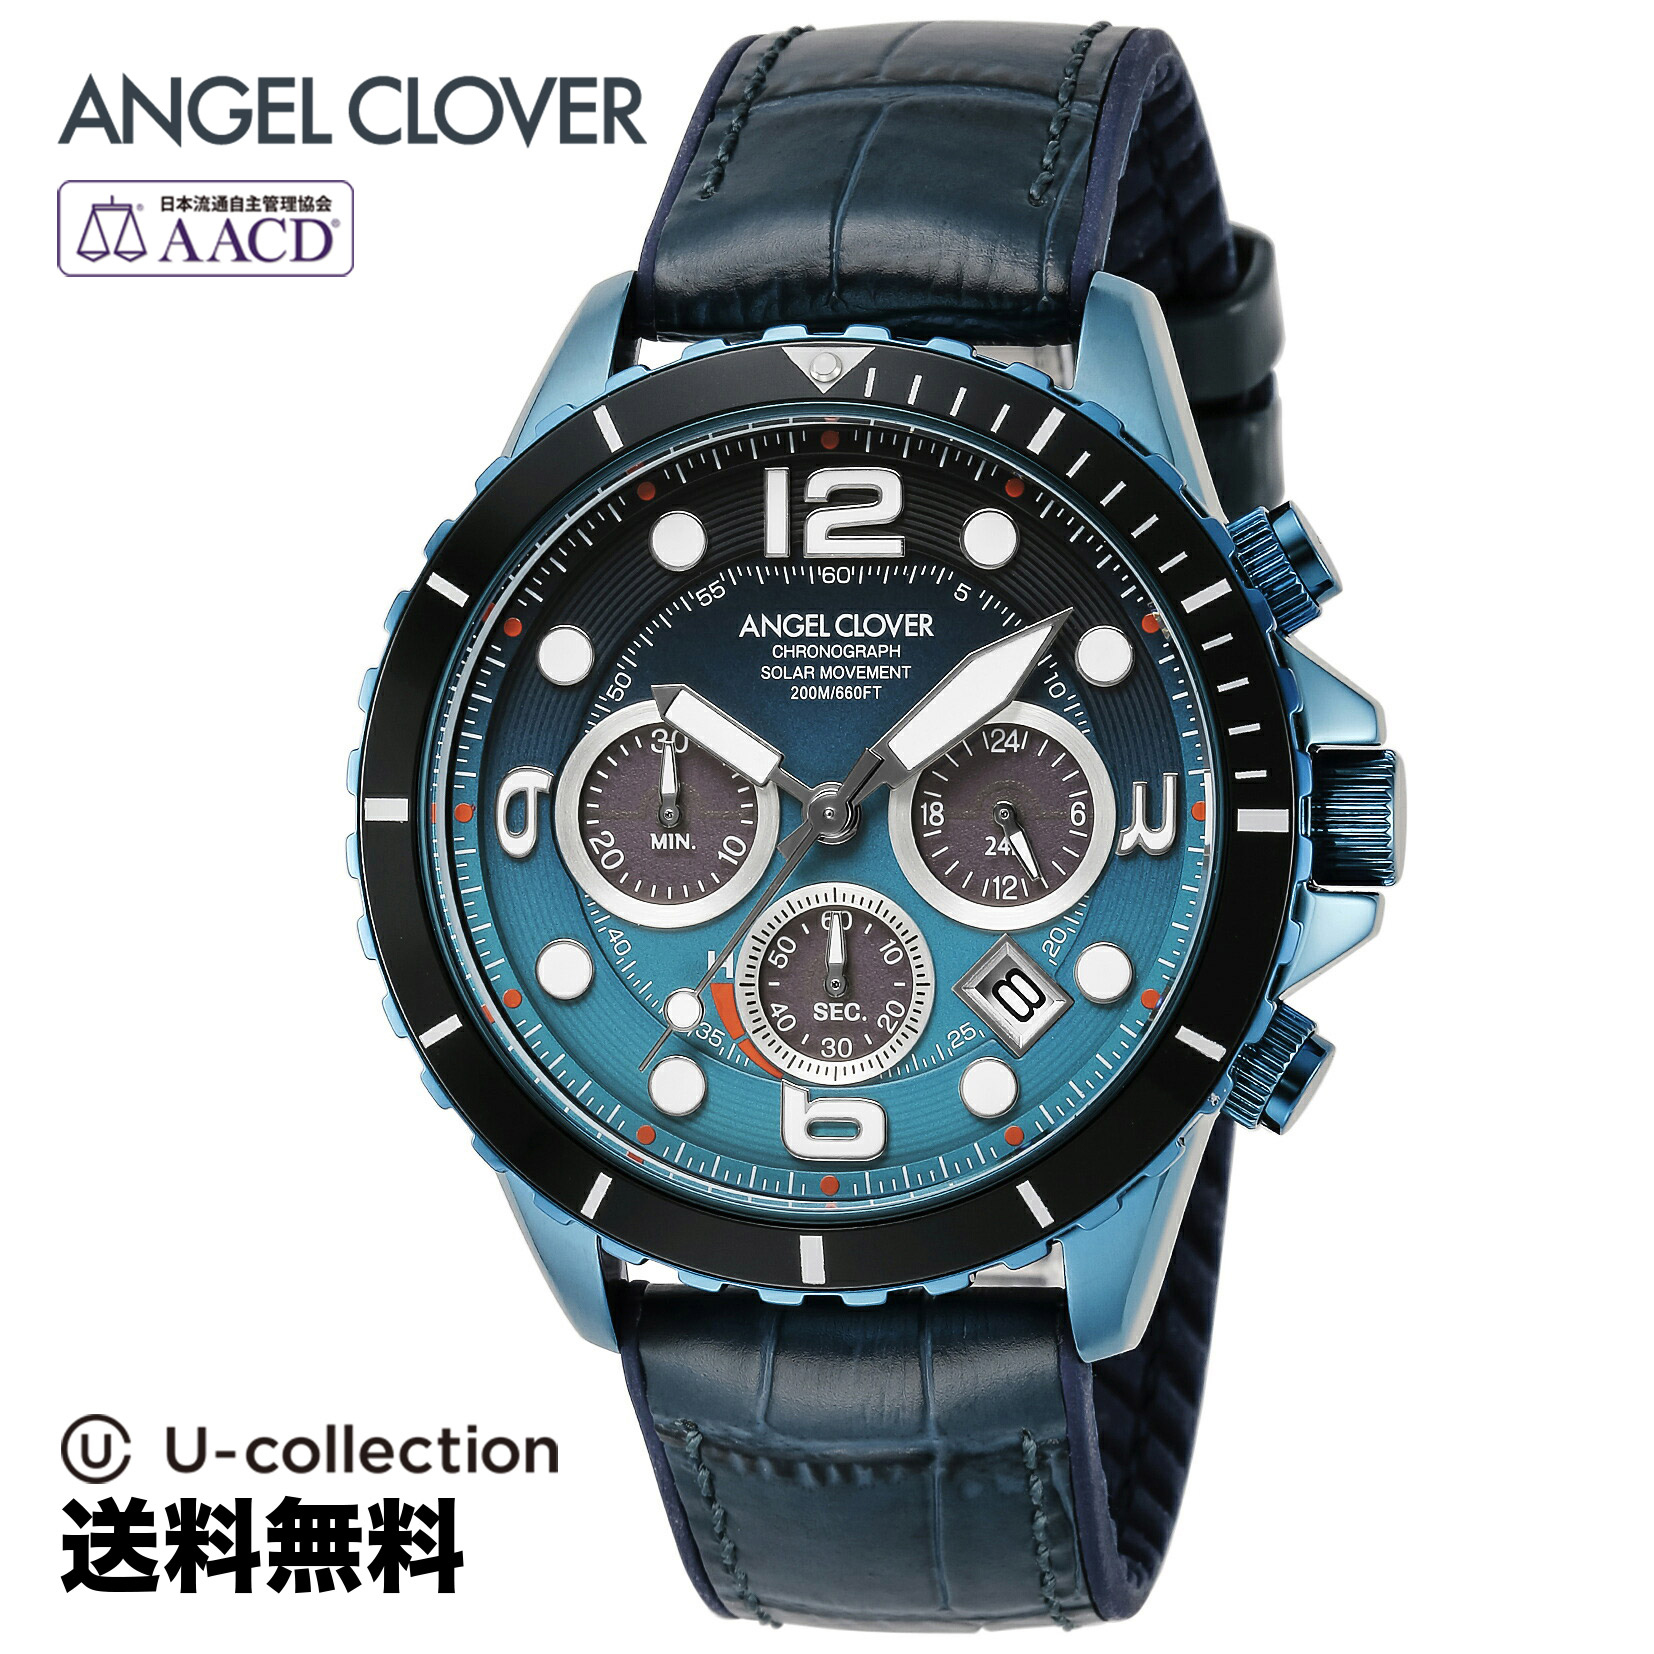 Angel clover ソーラー腕時計 - 通販 - gofukuyasan.com